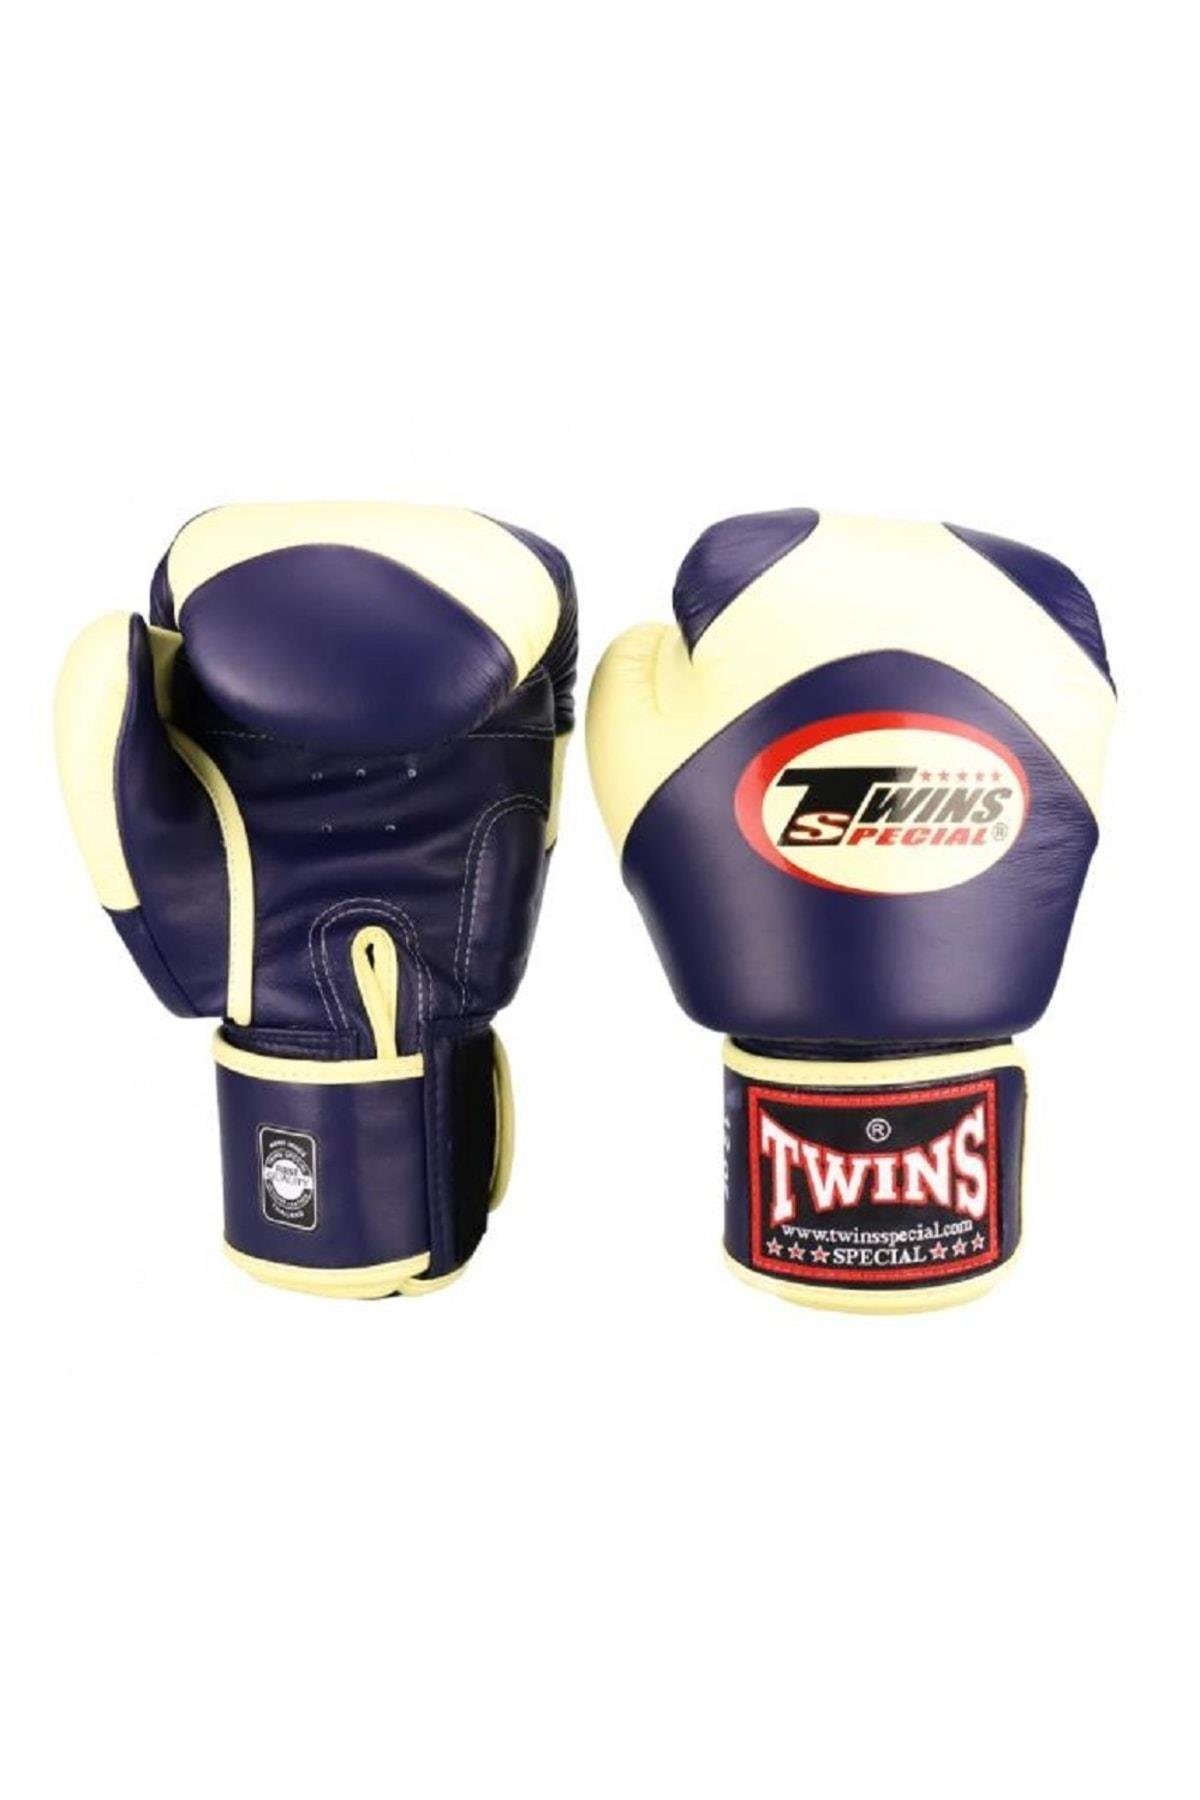 Twins Muay Thai Boks Eldiveni - Special Boxing Gloves Bgvl1 - Boksshop